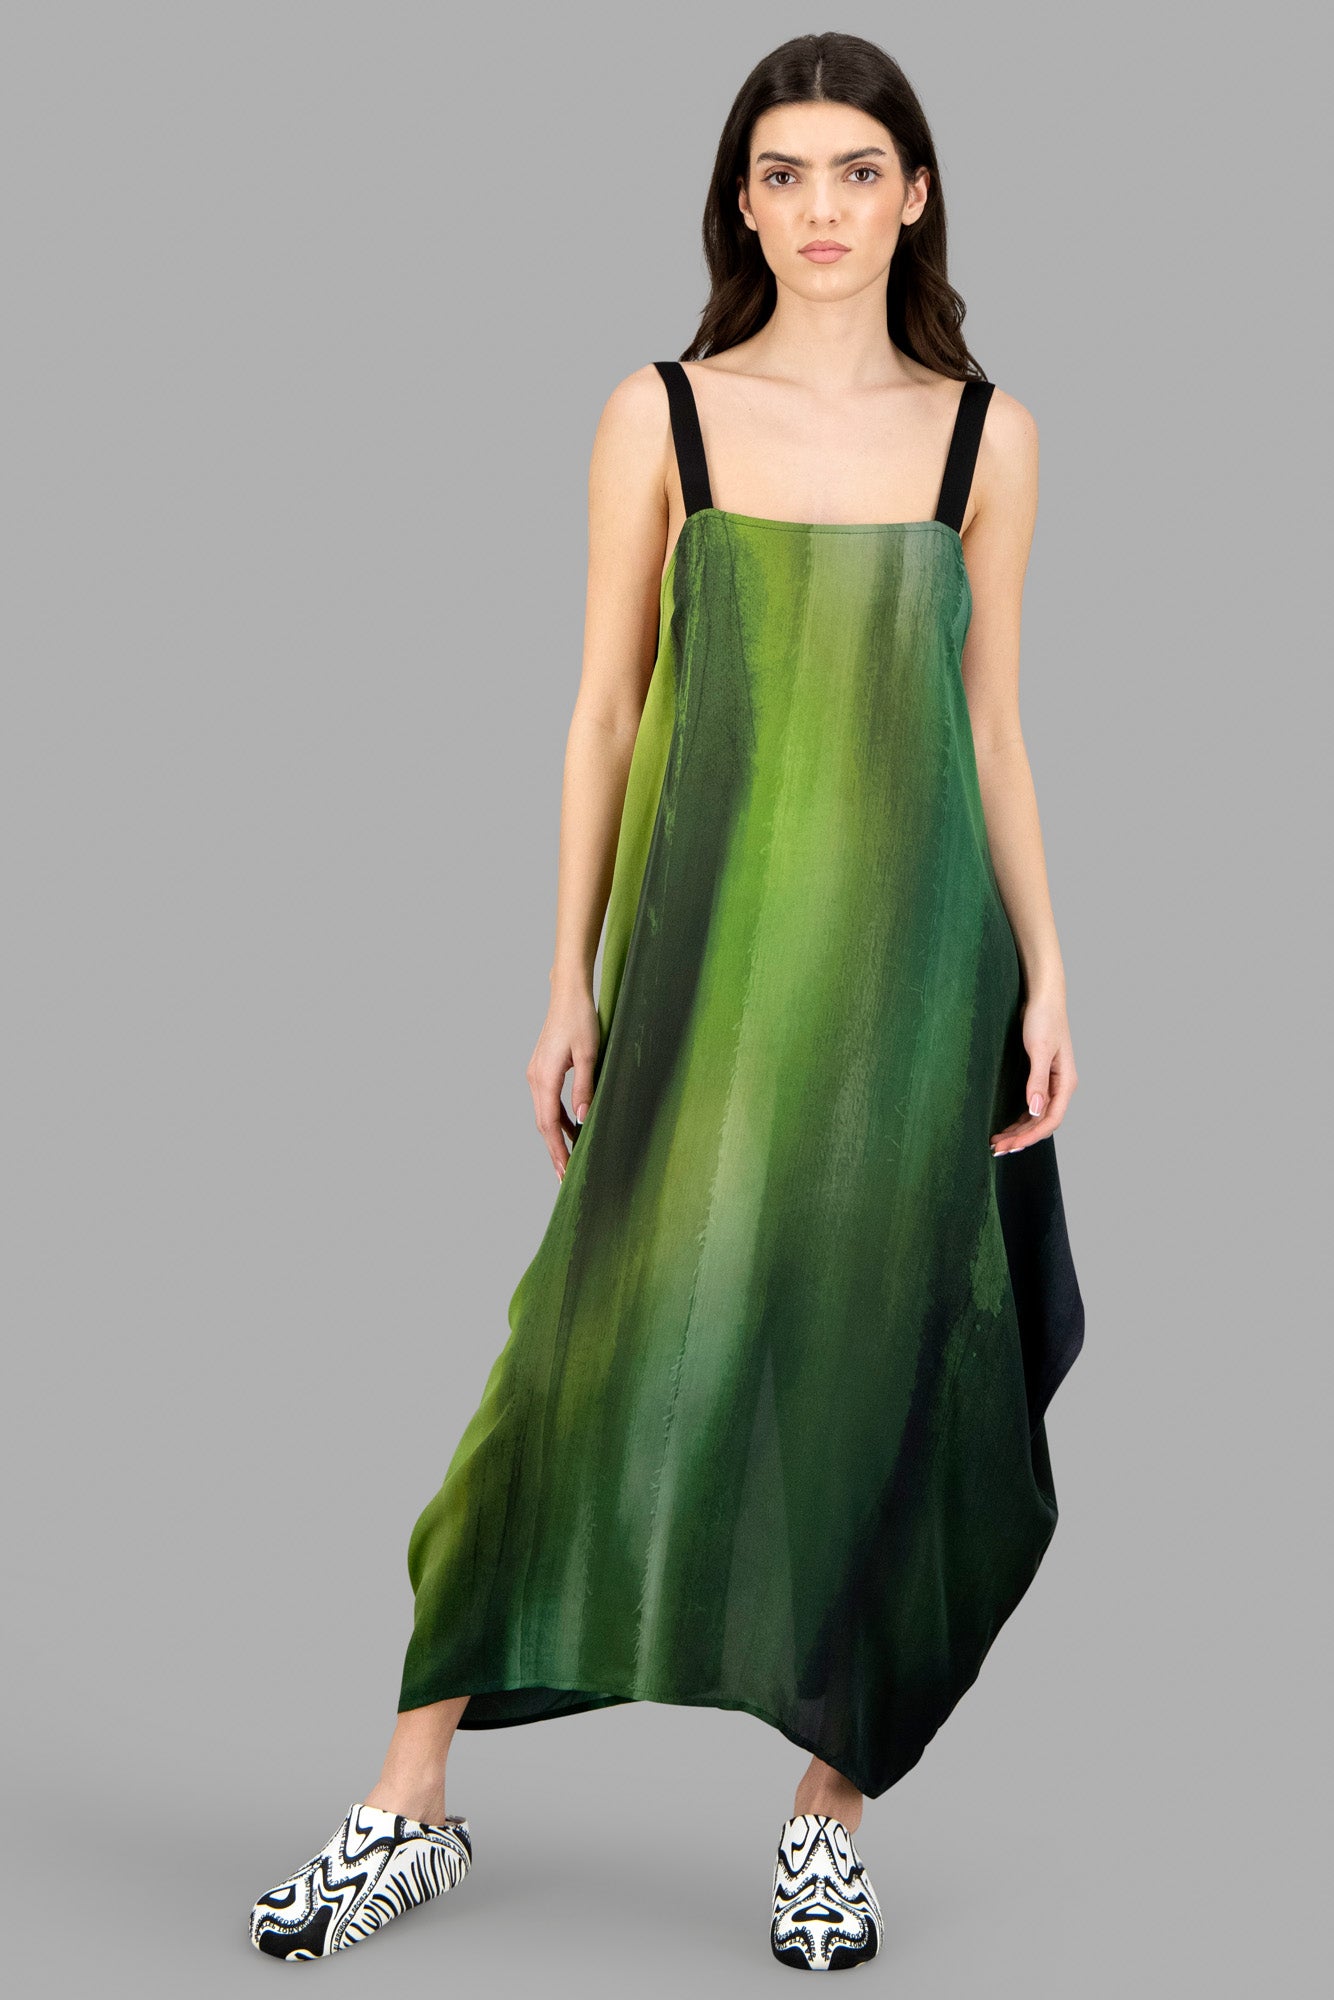 Gradient-Print Dress